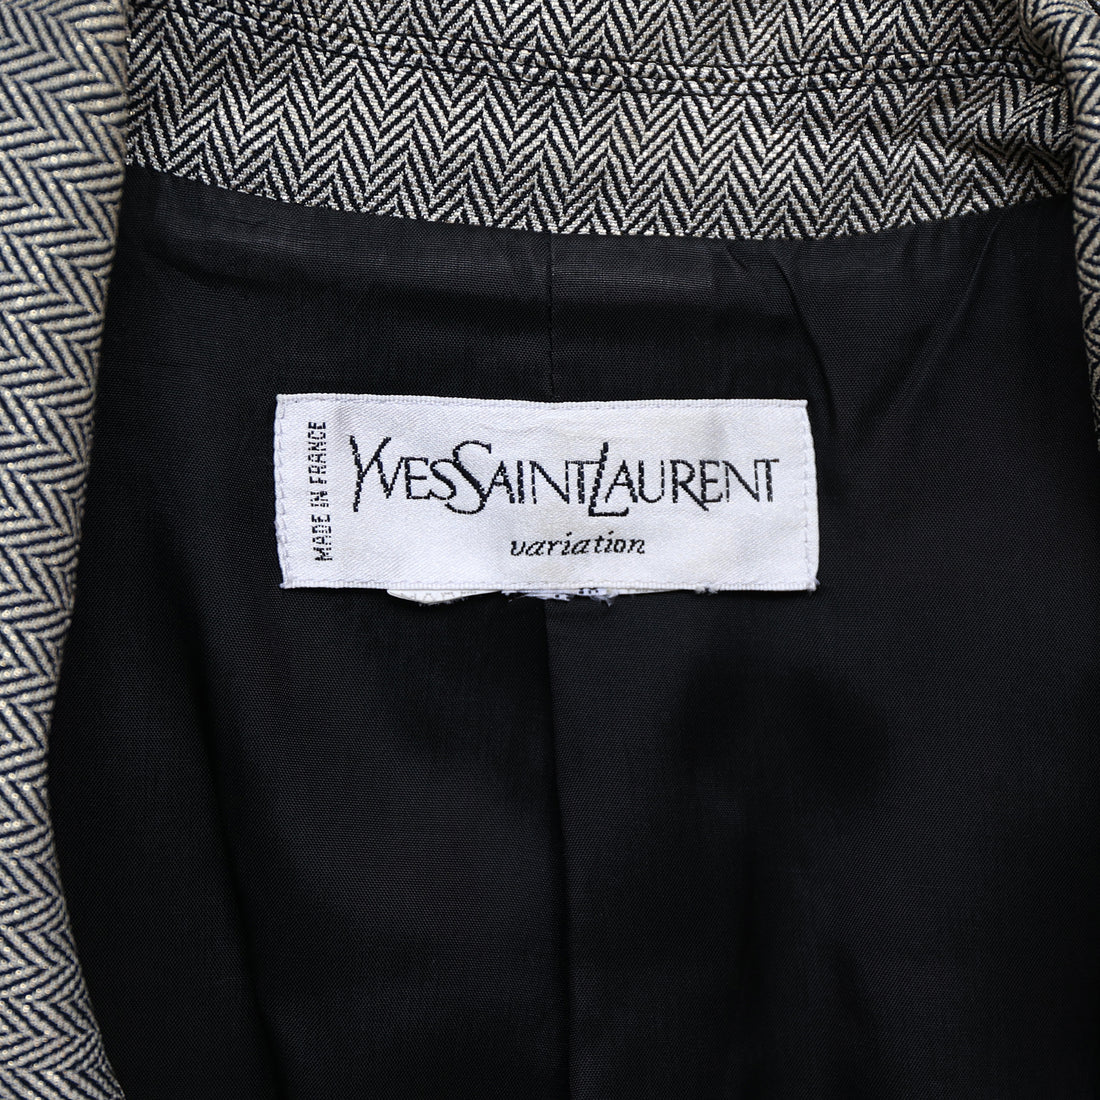 Yves Saint Laurent double-breasted metallic herringbone blazer